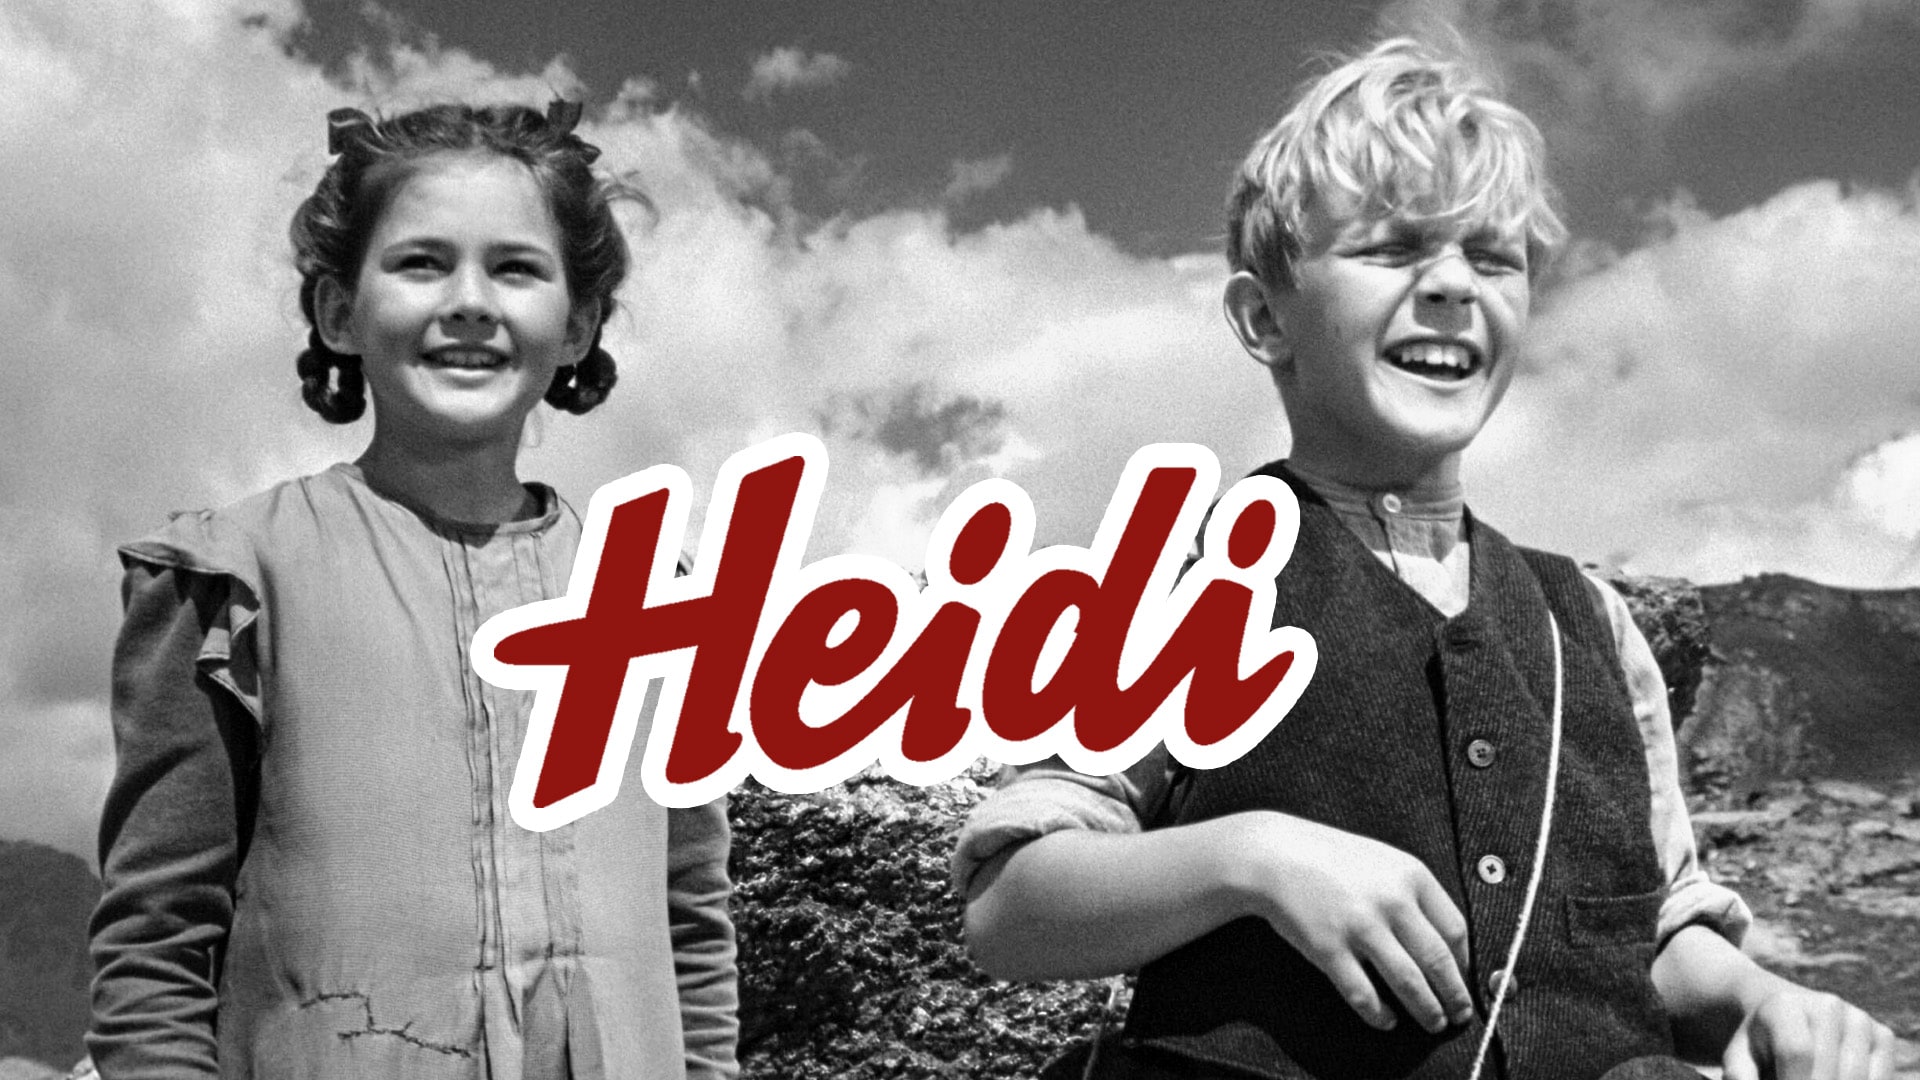 Heidi (1952)